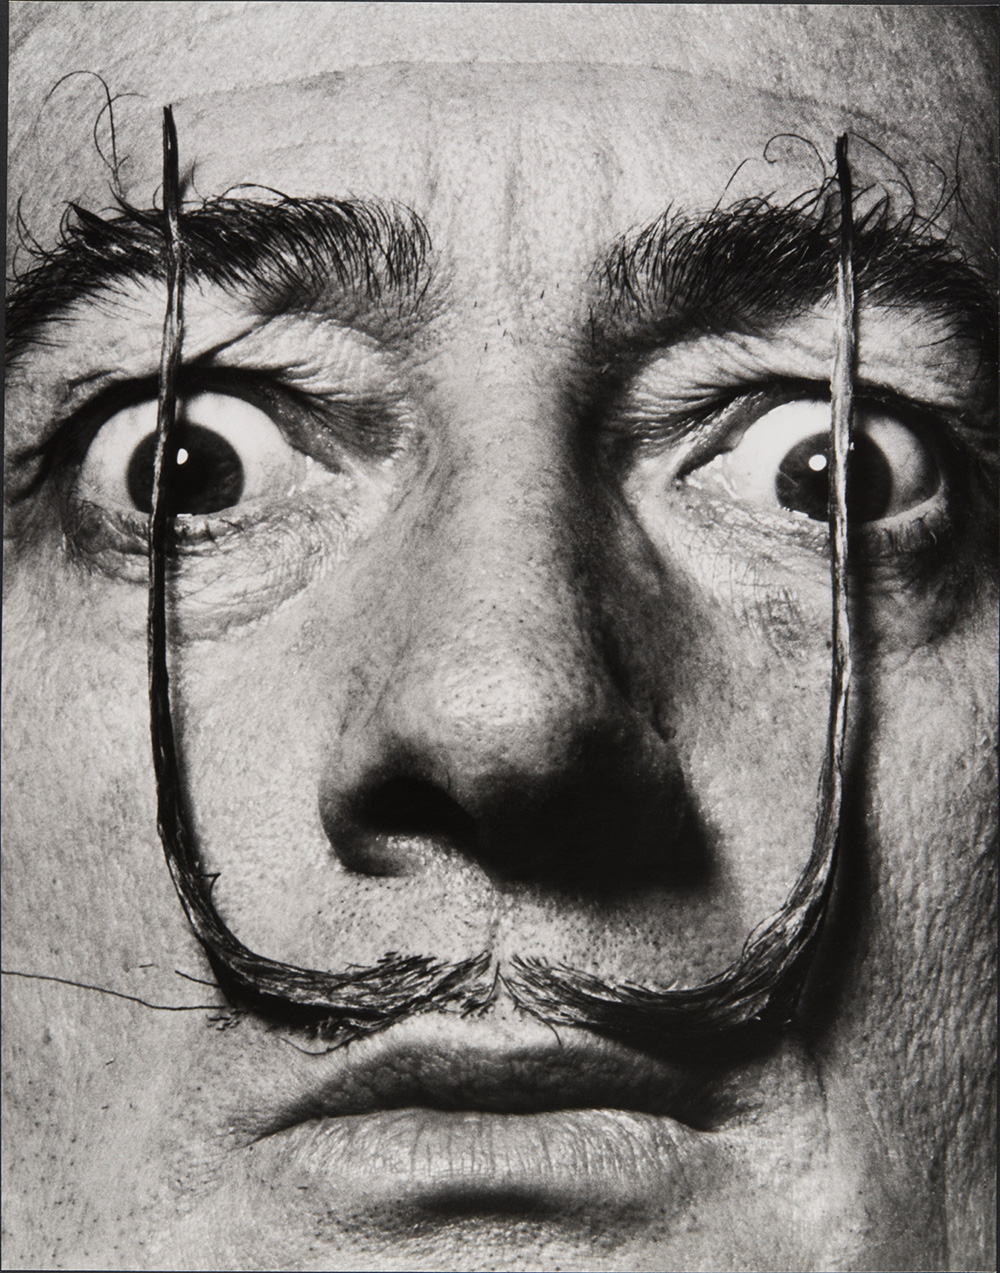 'Como dos centinelas erguidos, mi bigote custodia la entrada a mi verdadero yo', Dalí’s Mustache, 1954. (Philippe Halsman Archive / Magnum Photos)